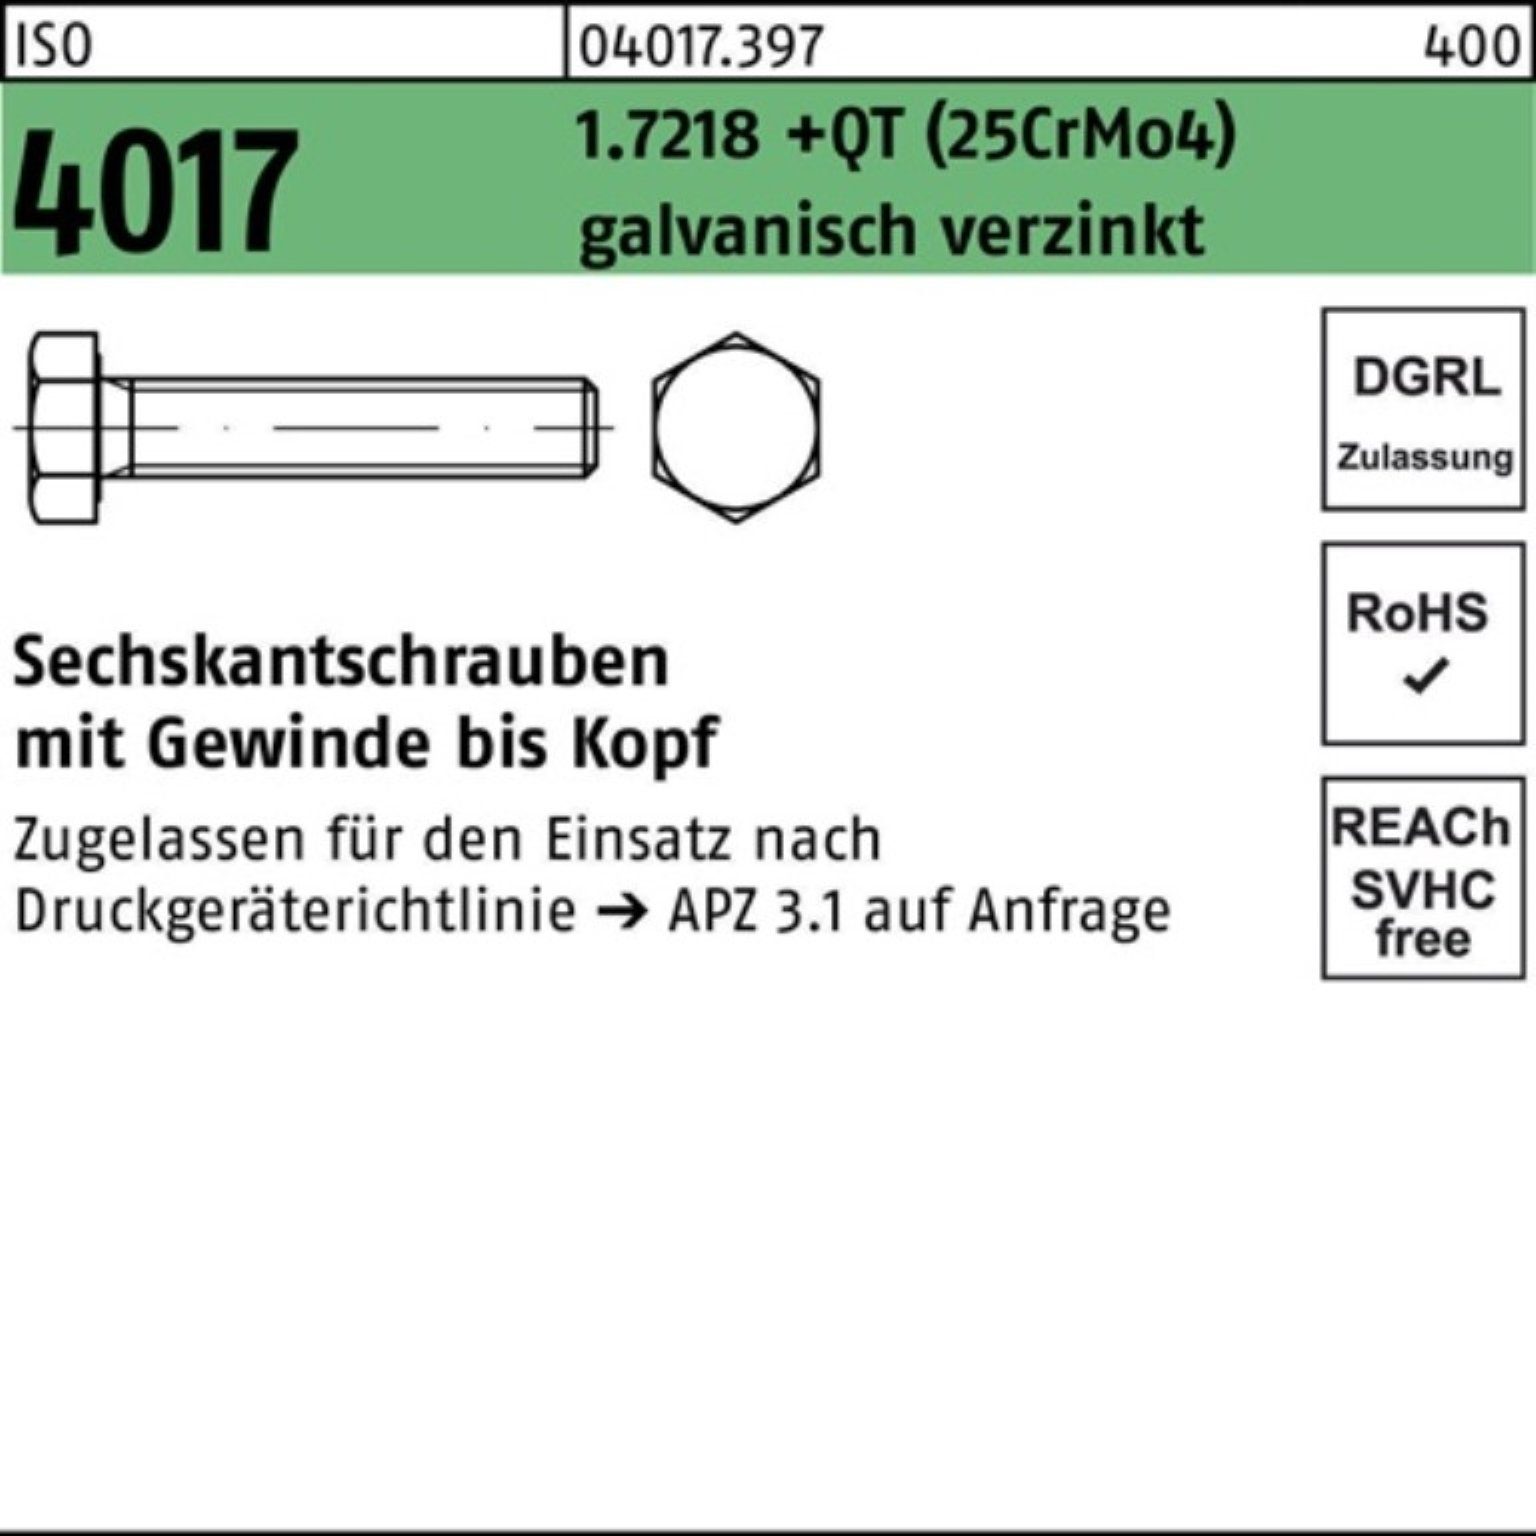 Bufab Sechskantschraube 4017 (25CrMo4) Pack VG +QT g 100er ISO 1.7218 M16x70 Sechskantschraube